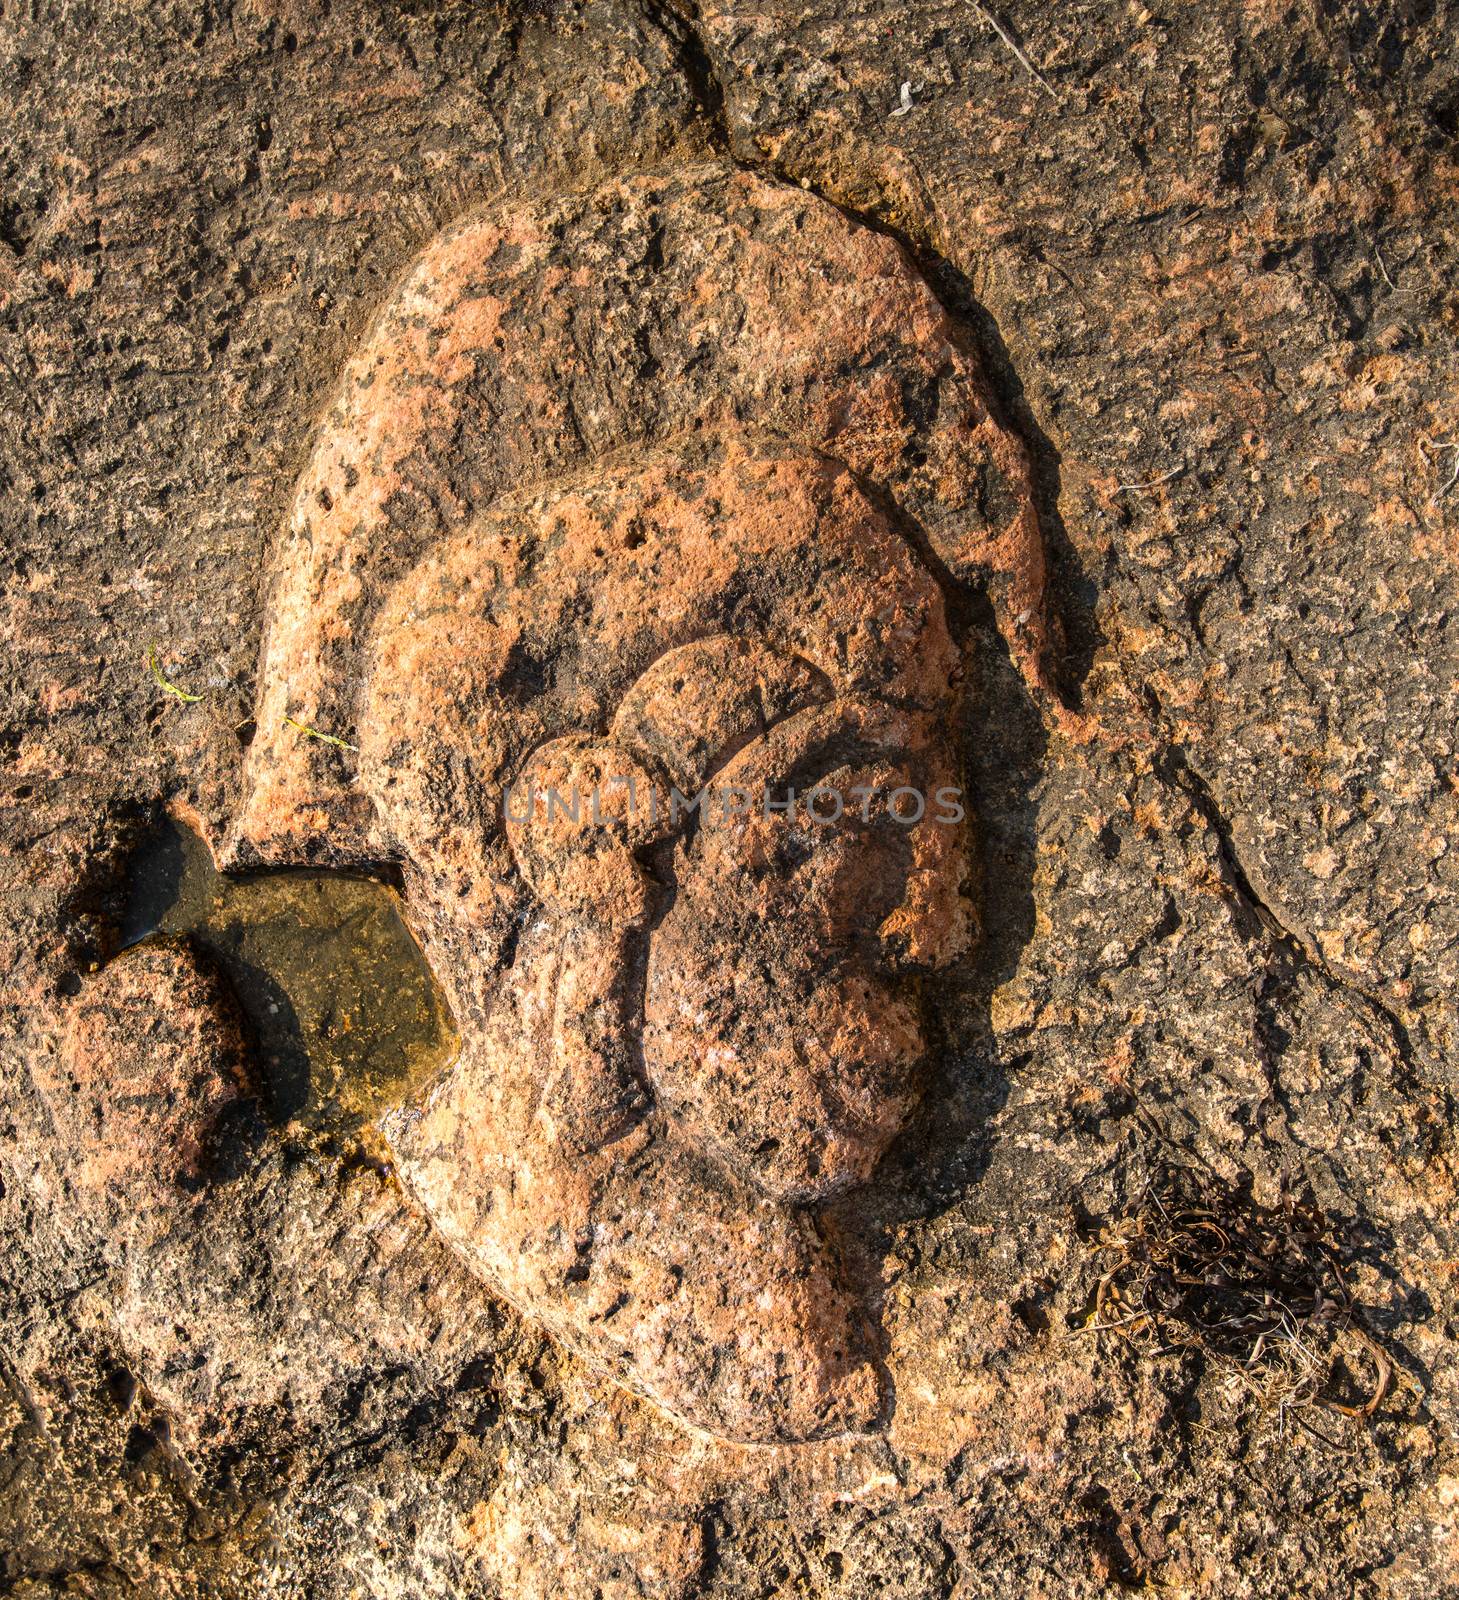 Rock carvings on the beach (head of the Roman legionary) near Sevastopol (Crimea), Ukraine, May 2013